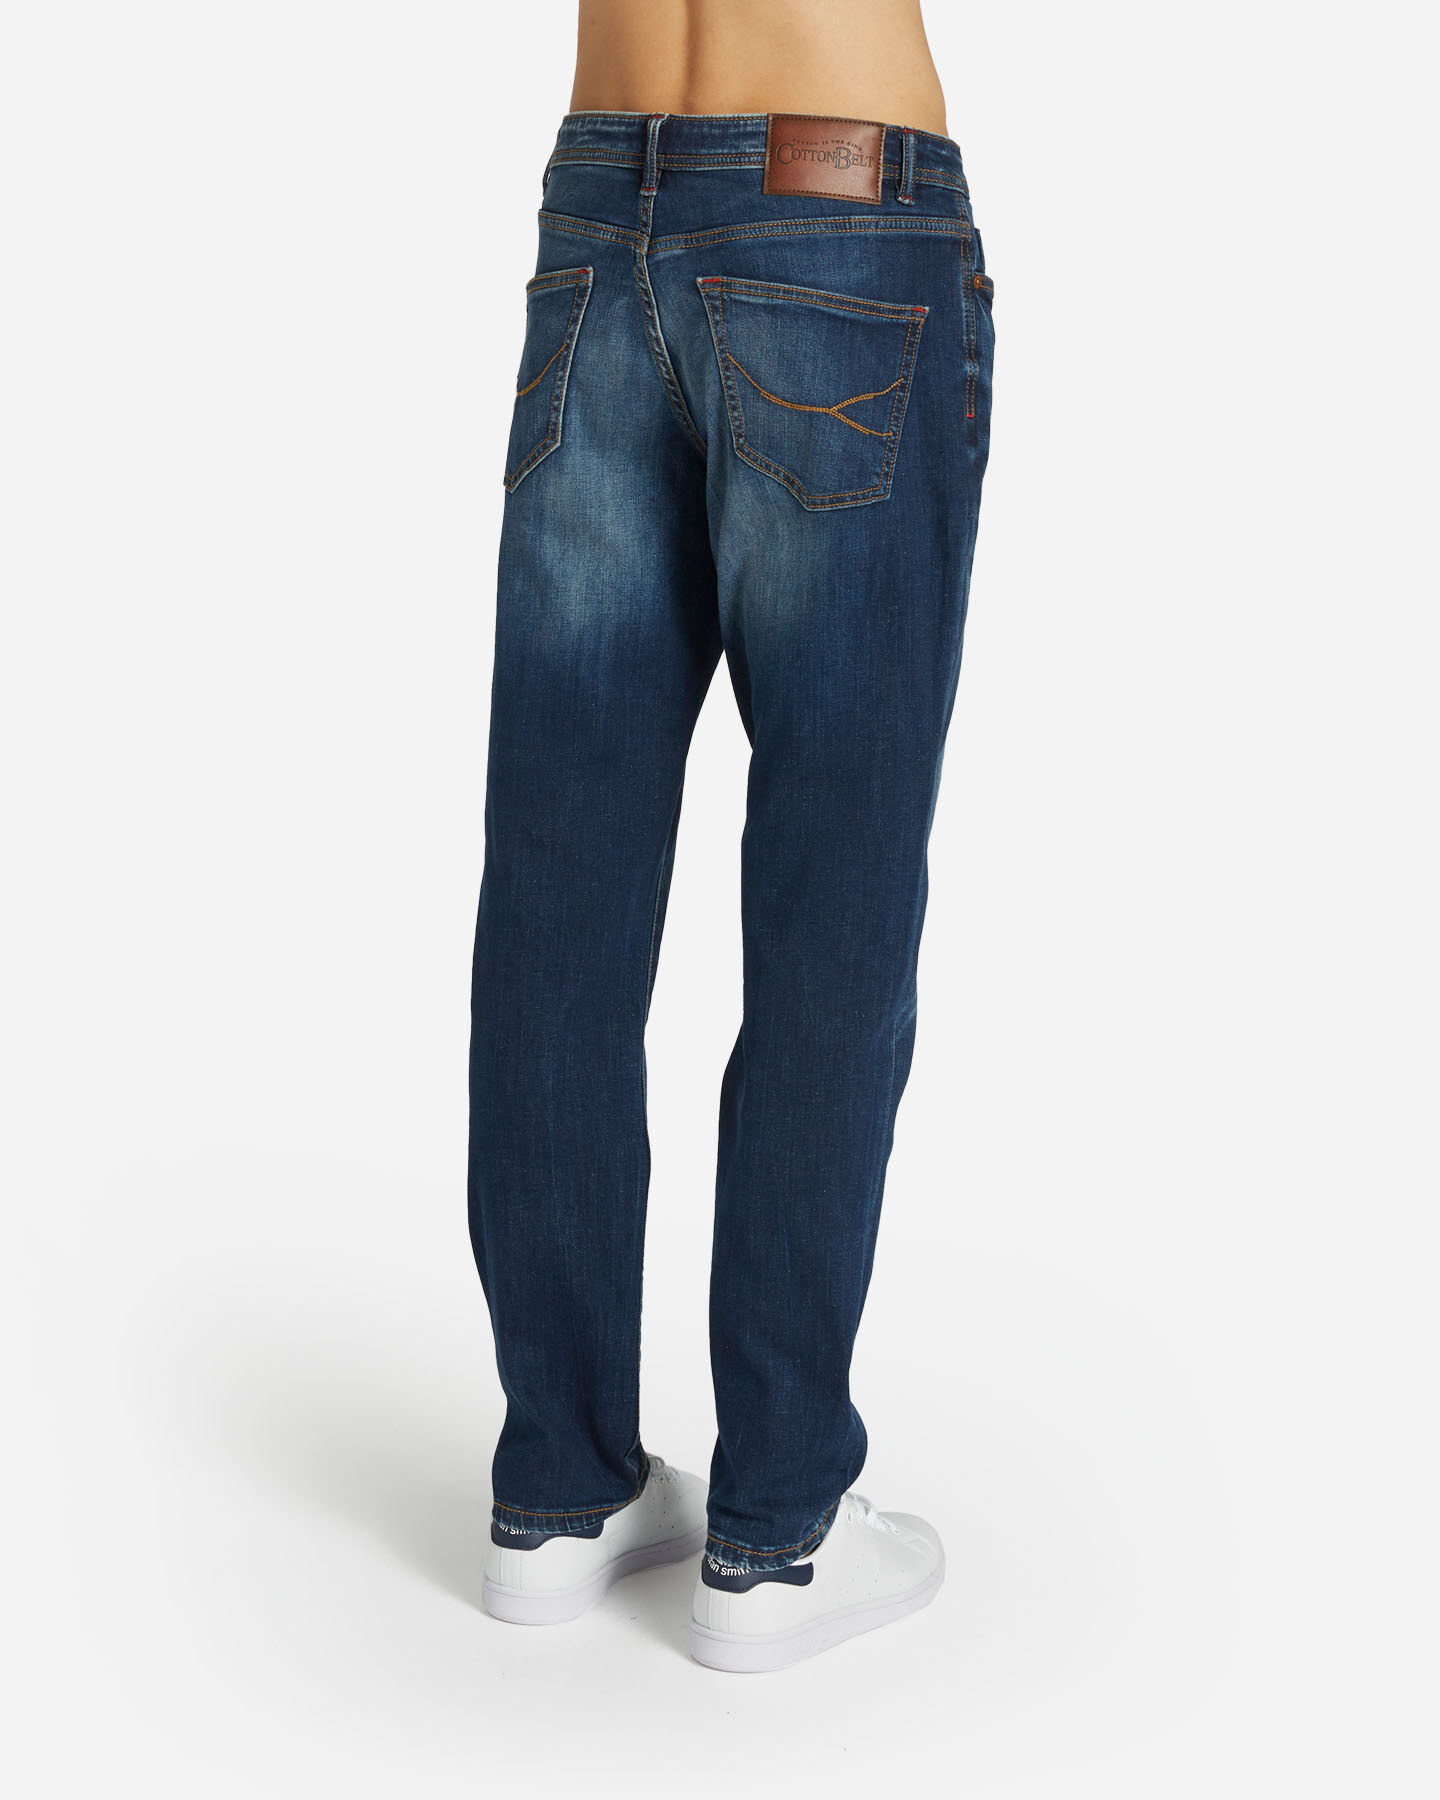  Jeans COTTON BELT 5 POCKET M S4126997|DD|30 scatto 1